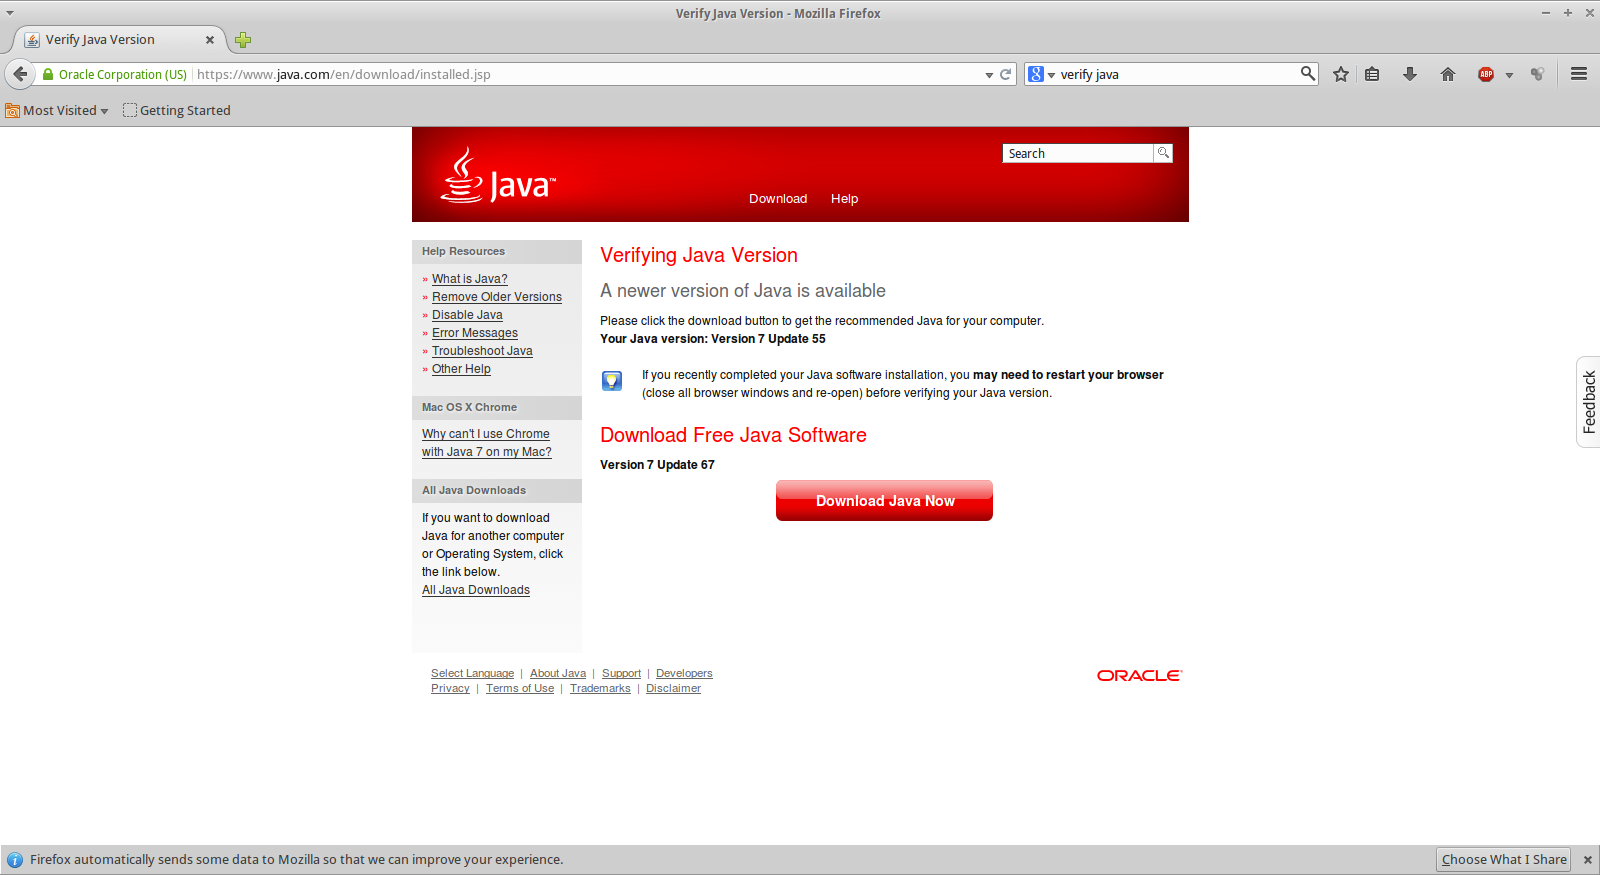 download java 6 for windows 7